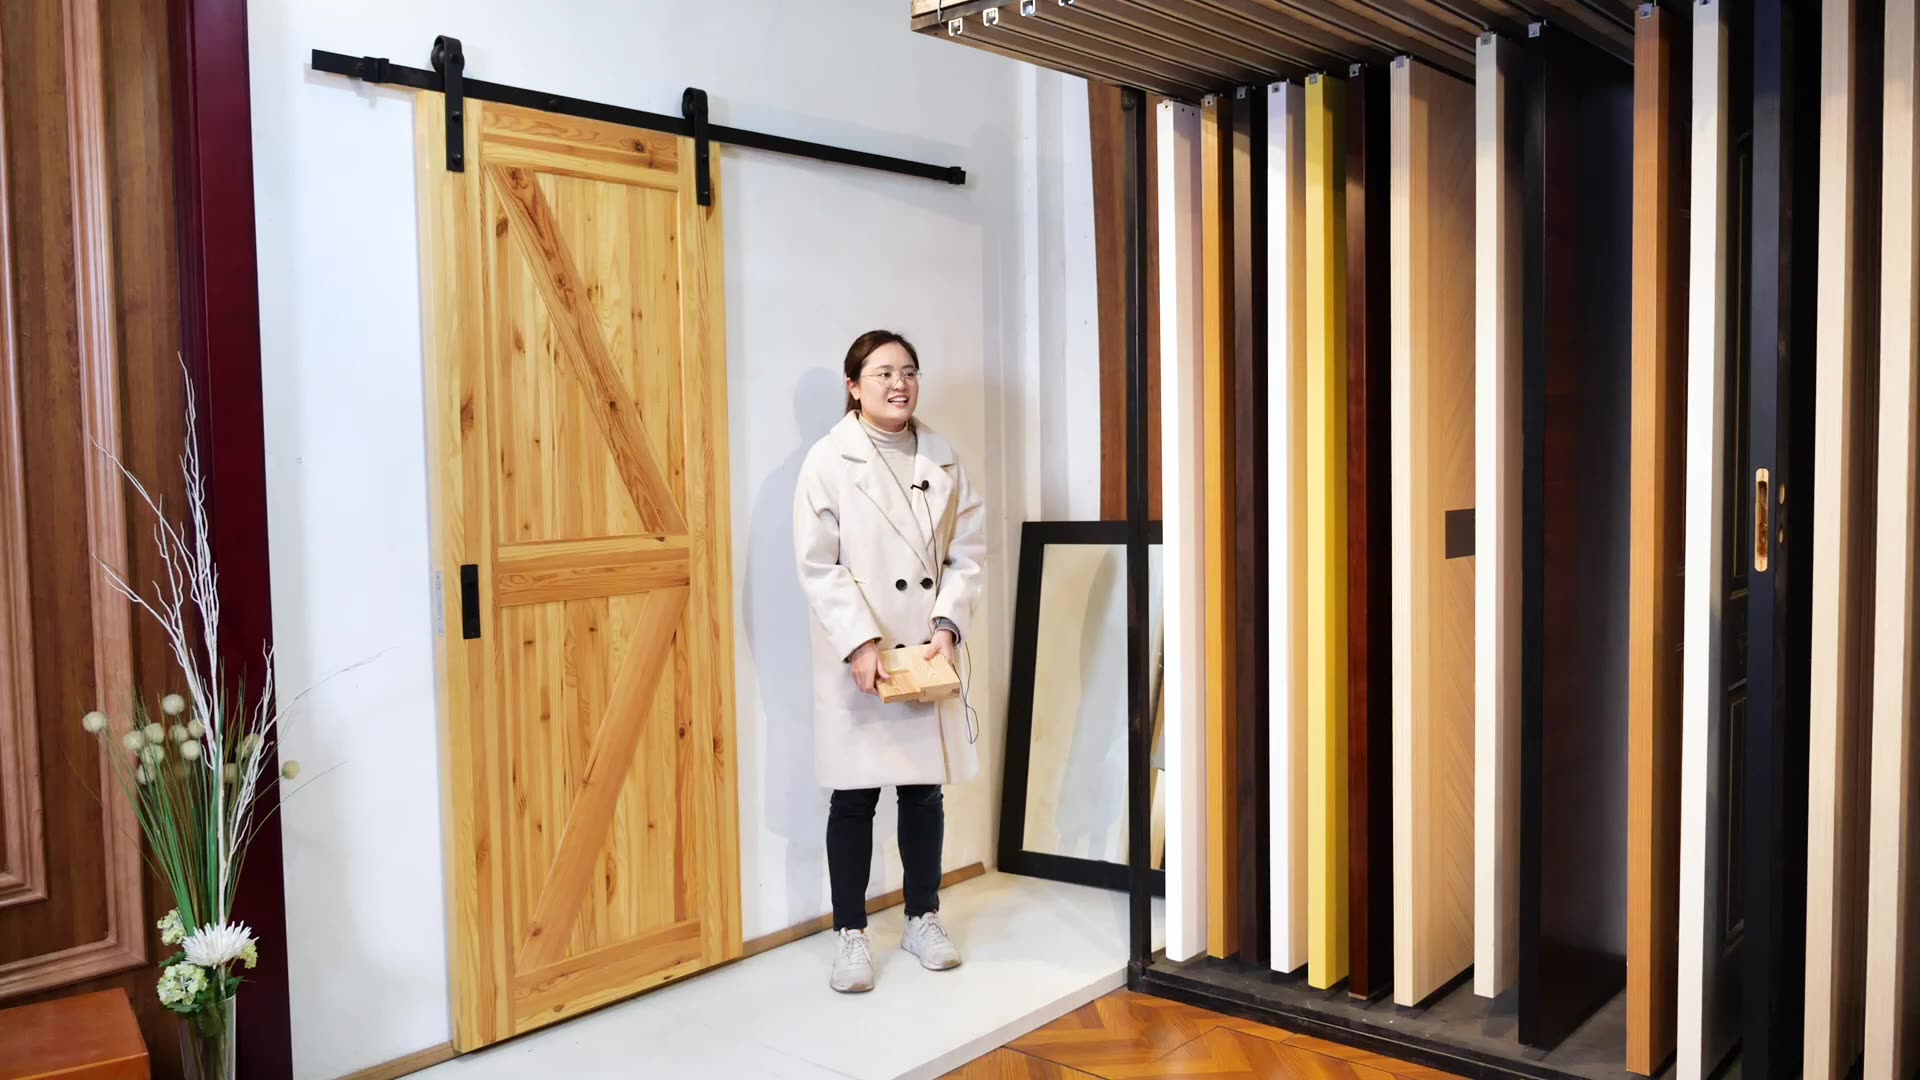 Prettywood Modern Decking Design Interior Solid Wooden Sliding Barn Doors For Sale